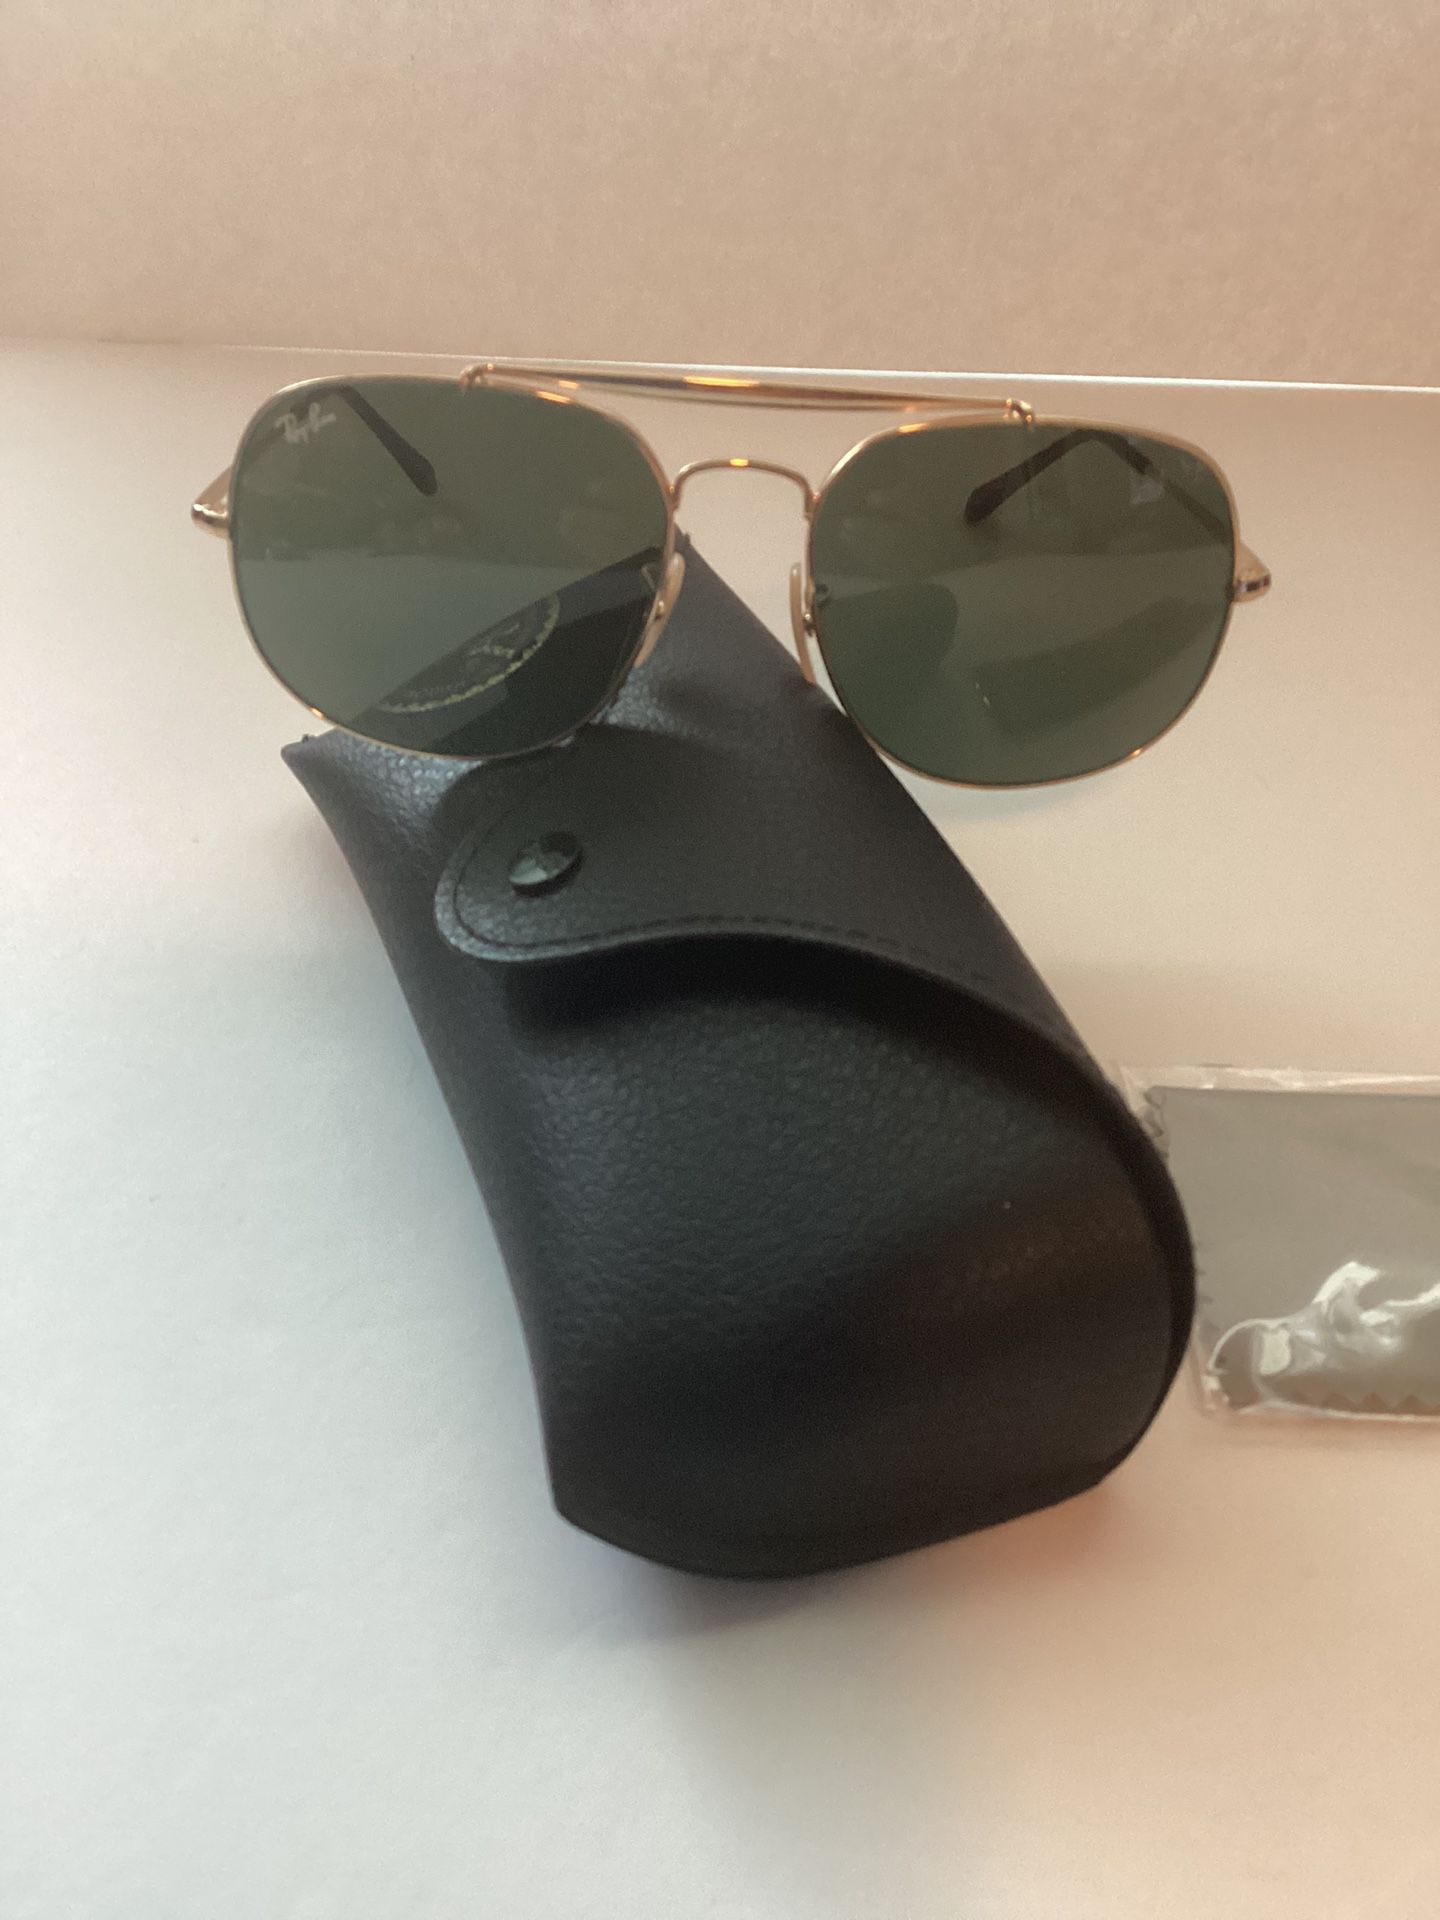 Men’s Ray Ban Sunglasses RB3561 “General “ Gold Frame Green Lens $100 Firm